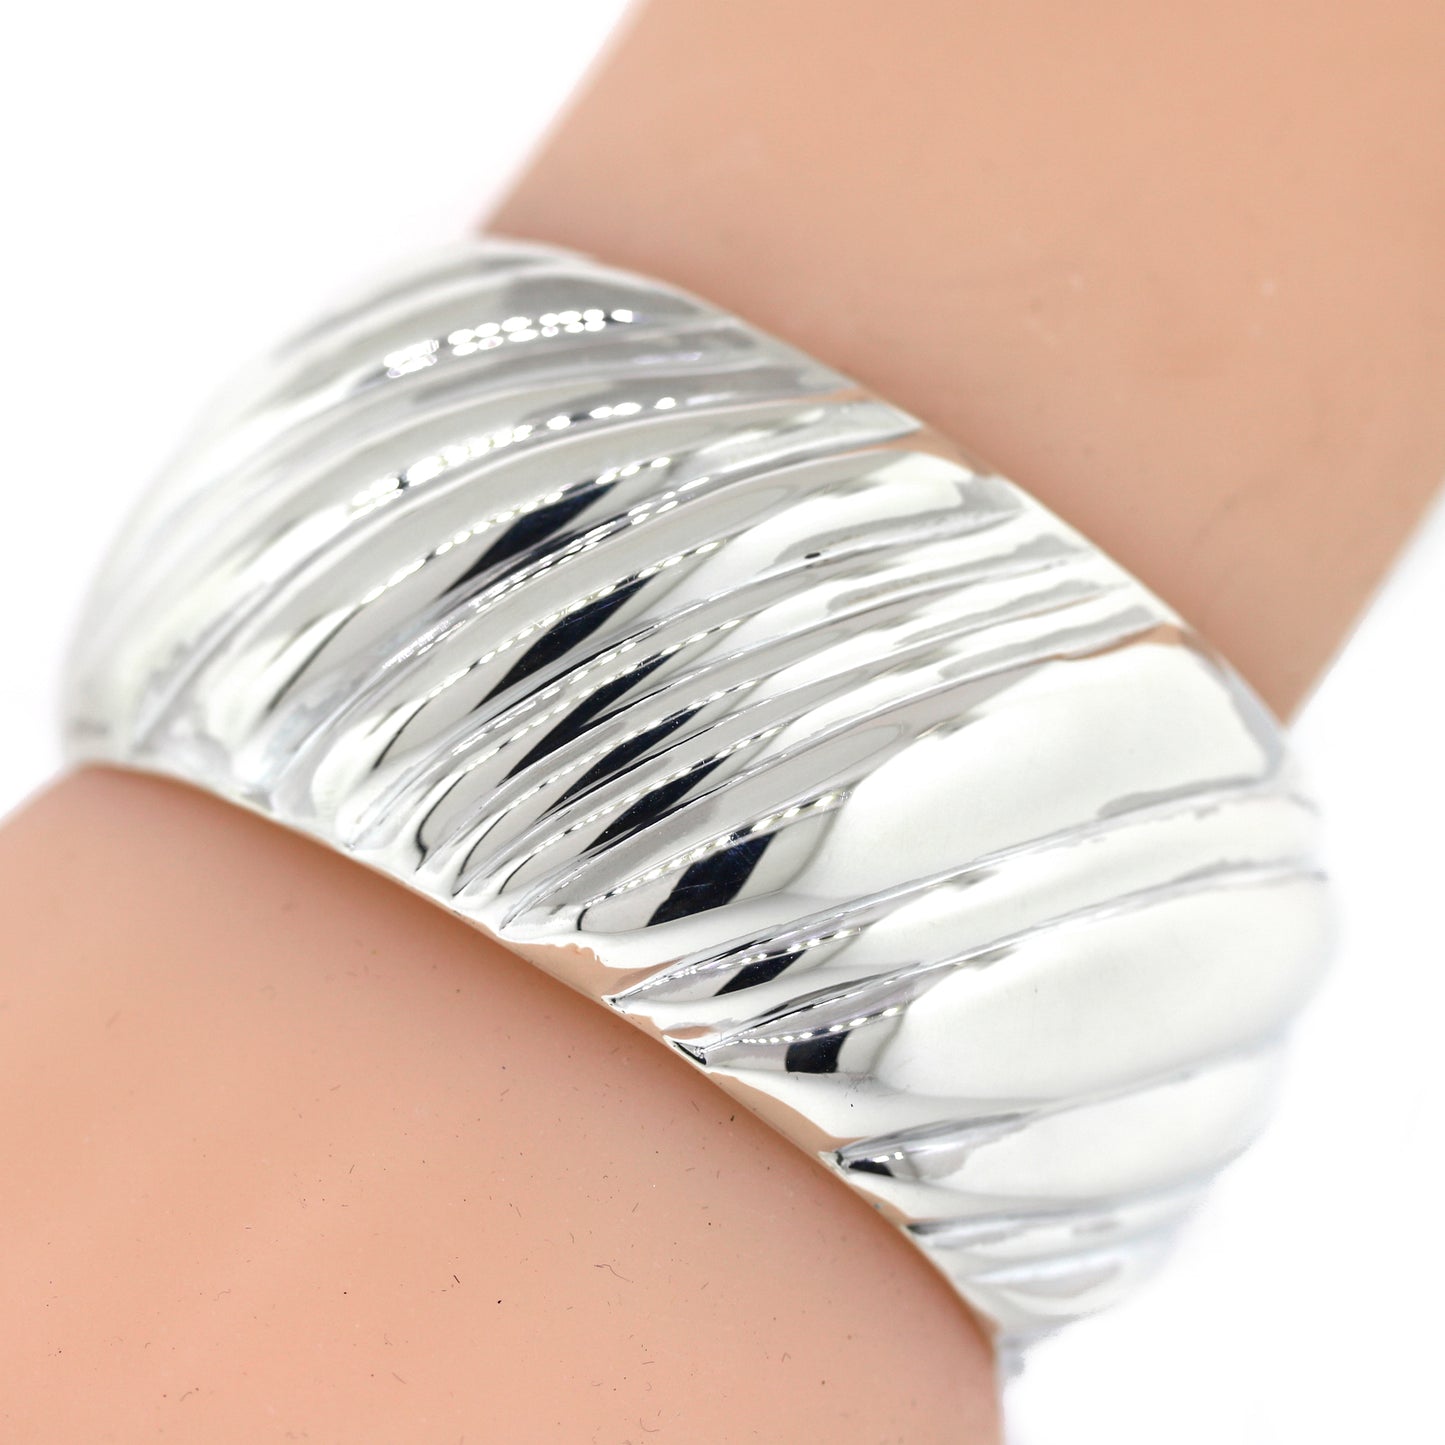 Tiffany and Co. Swirl Cuff Bracelet in Sterling Silver